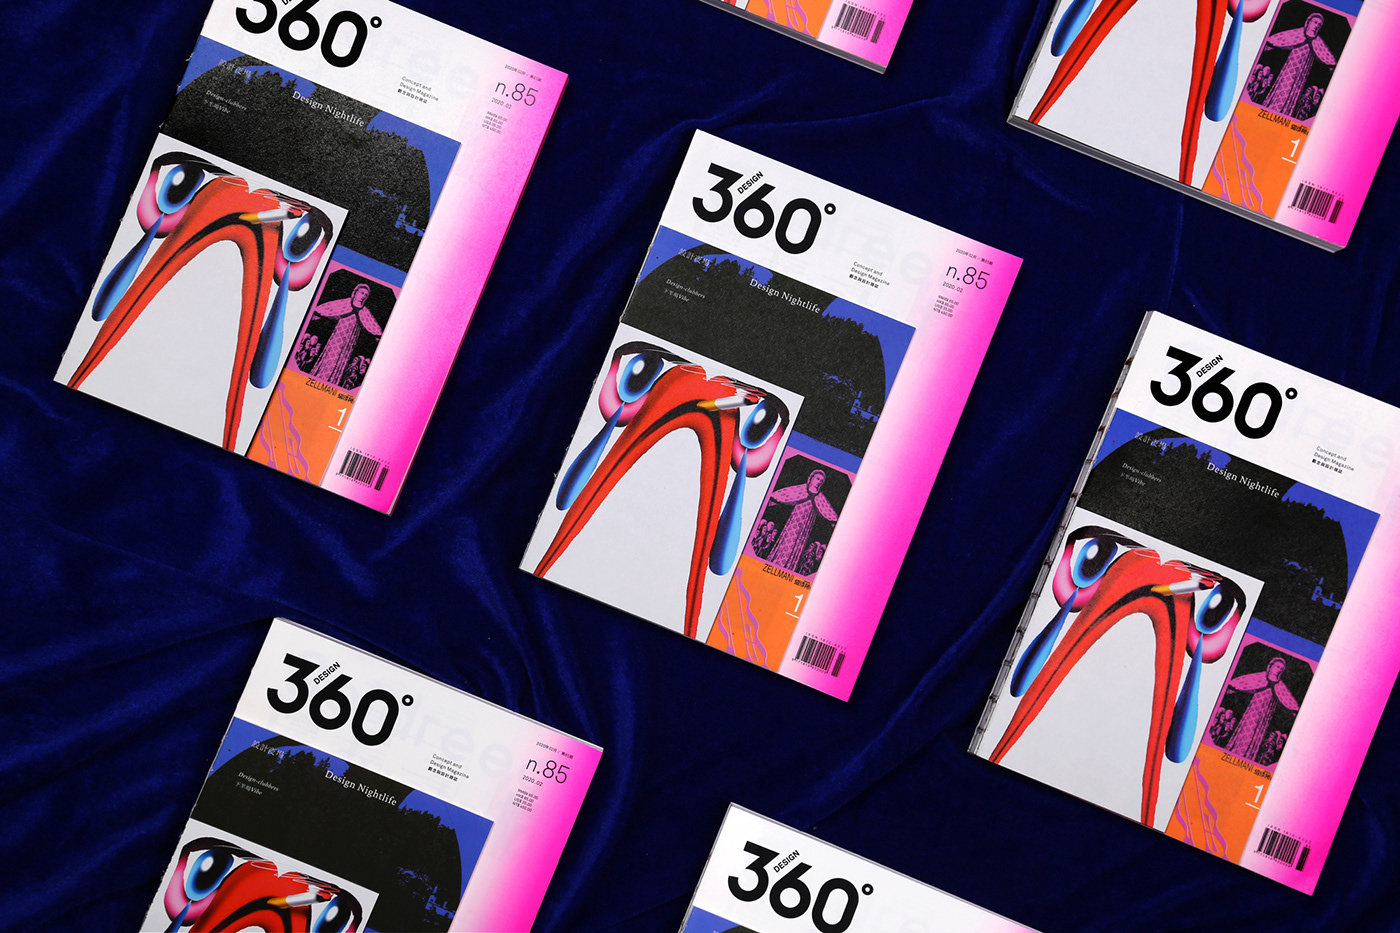 Adobe Max 2019 club design magazine design360 editorial malaysia music print music and design